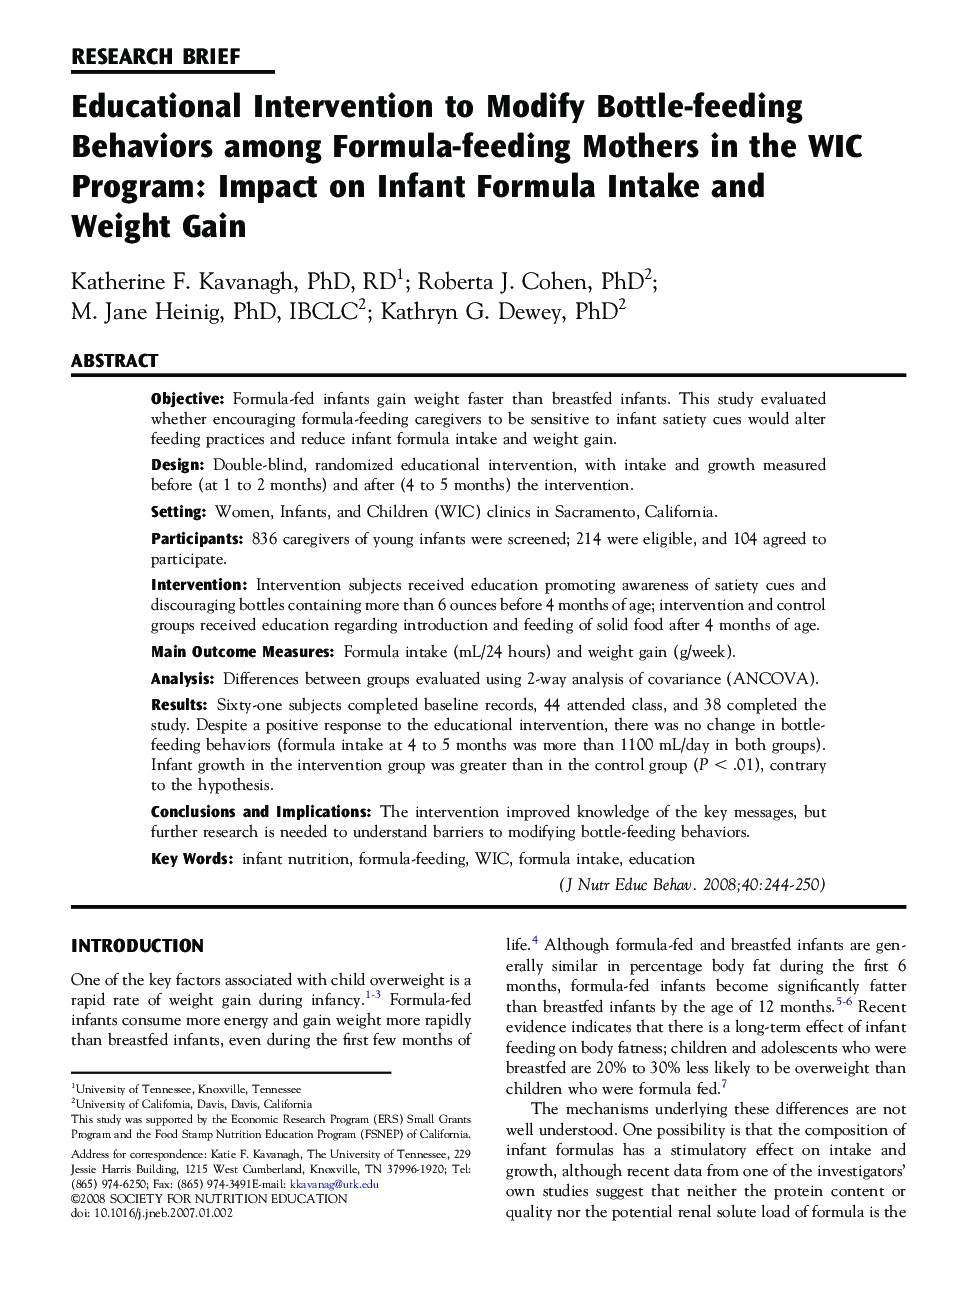 Educational Intervention to Modify Bottle-feeding Behaviors among Formula-feeding Mothers in the WIC Program: Impact on Infant Formula Intake and Weight Gain 